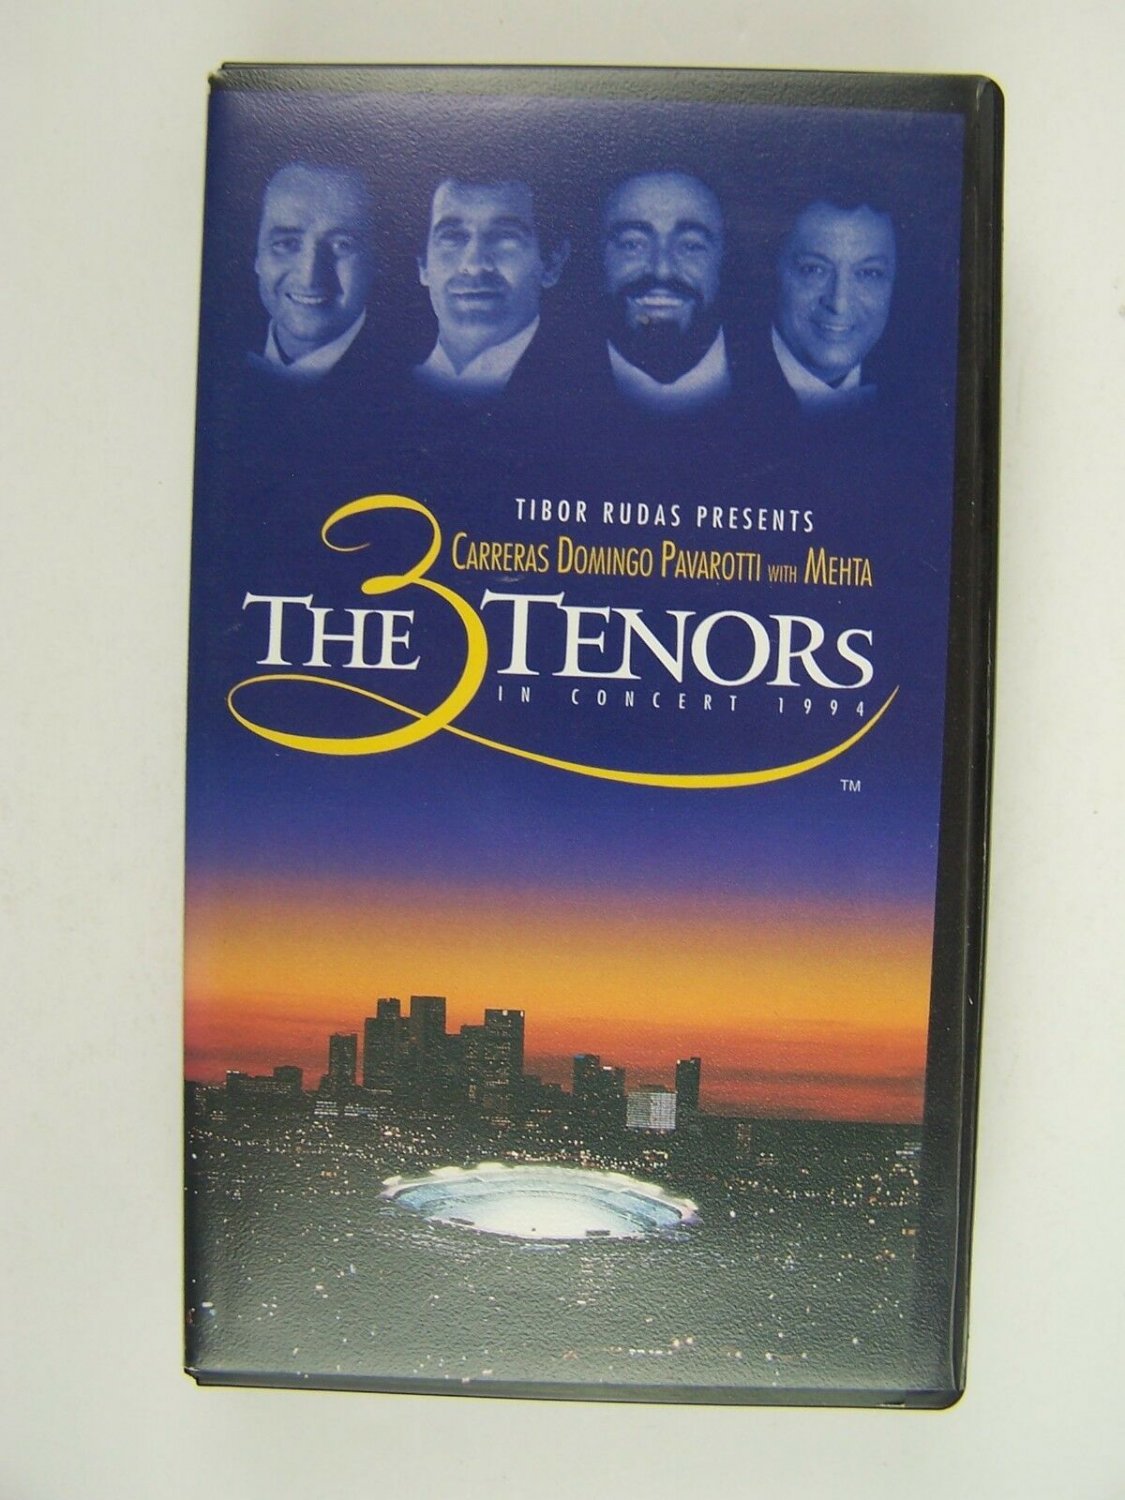 The 3 Tenors In Concert 1994 Vhs Video Tape Carreras Domingo Pavarotti